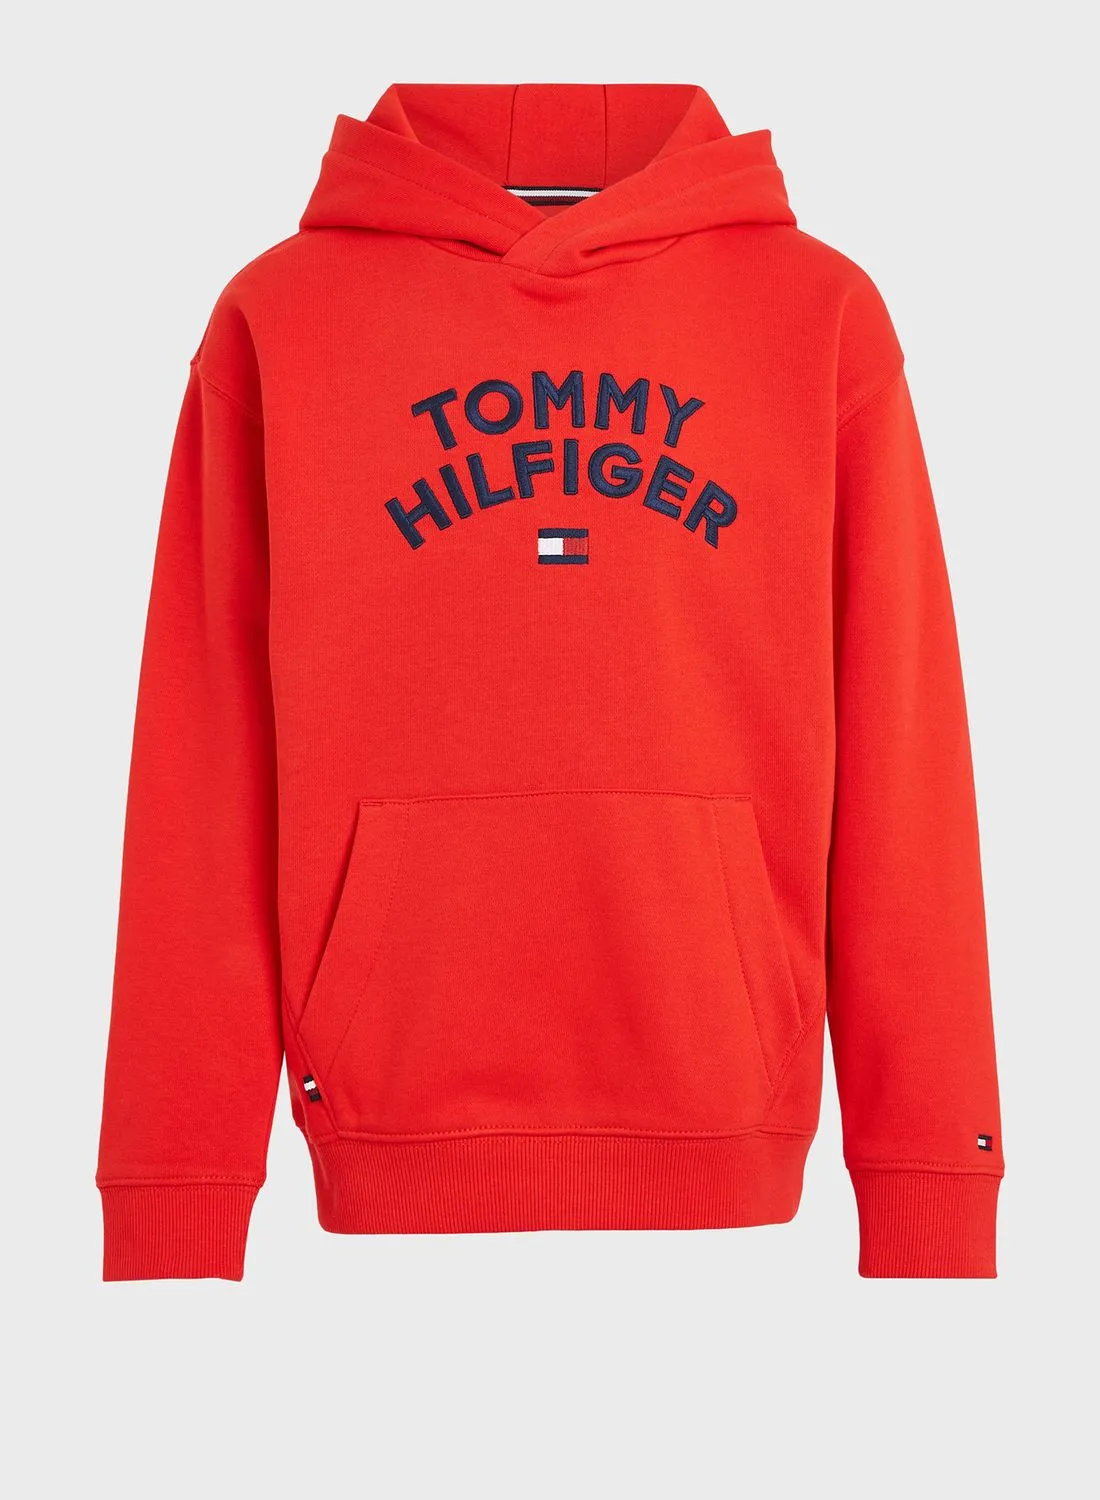 TOMMY HILFIGER Youth Logo Hoodie